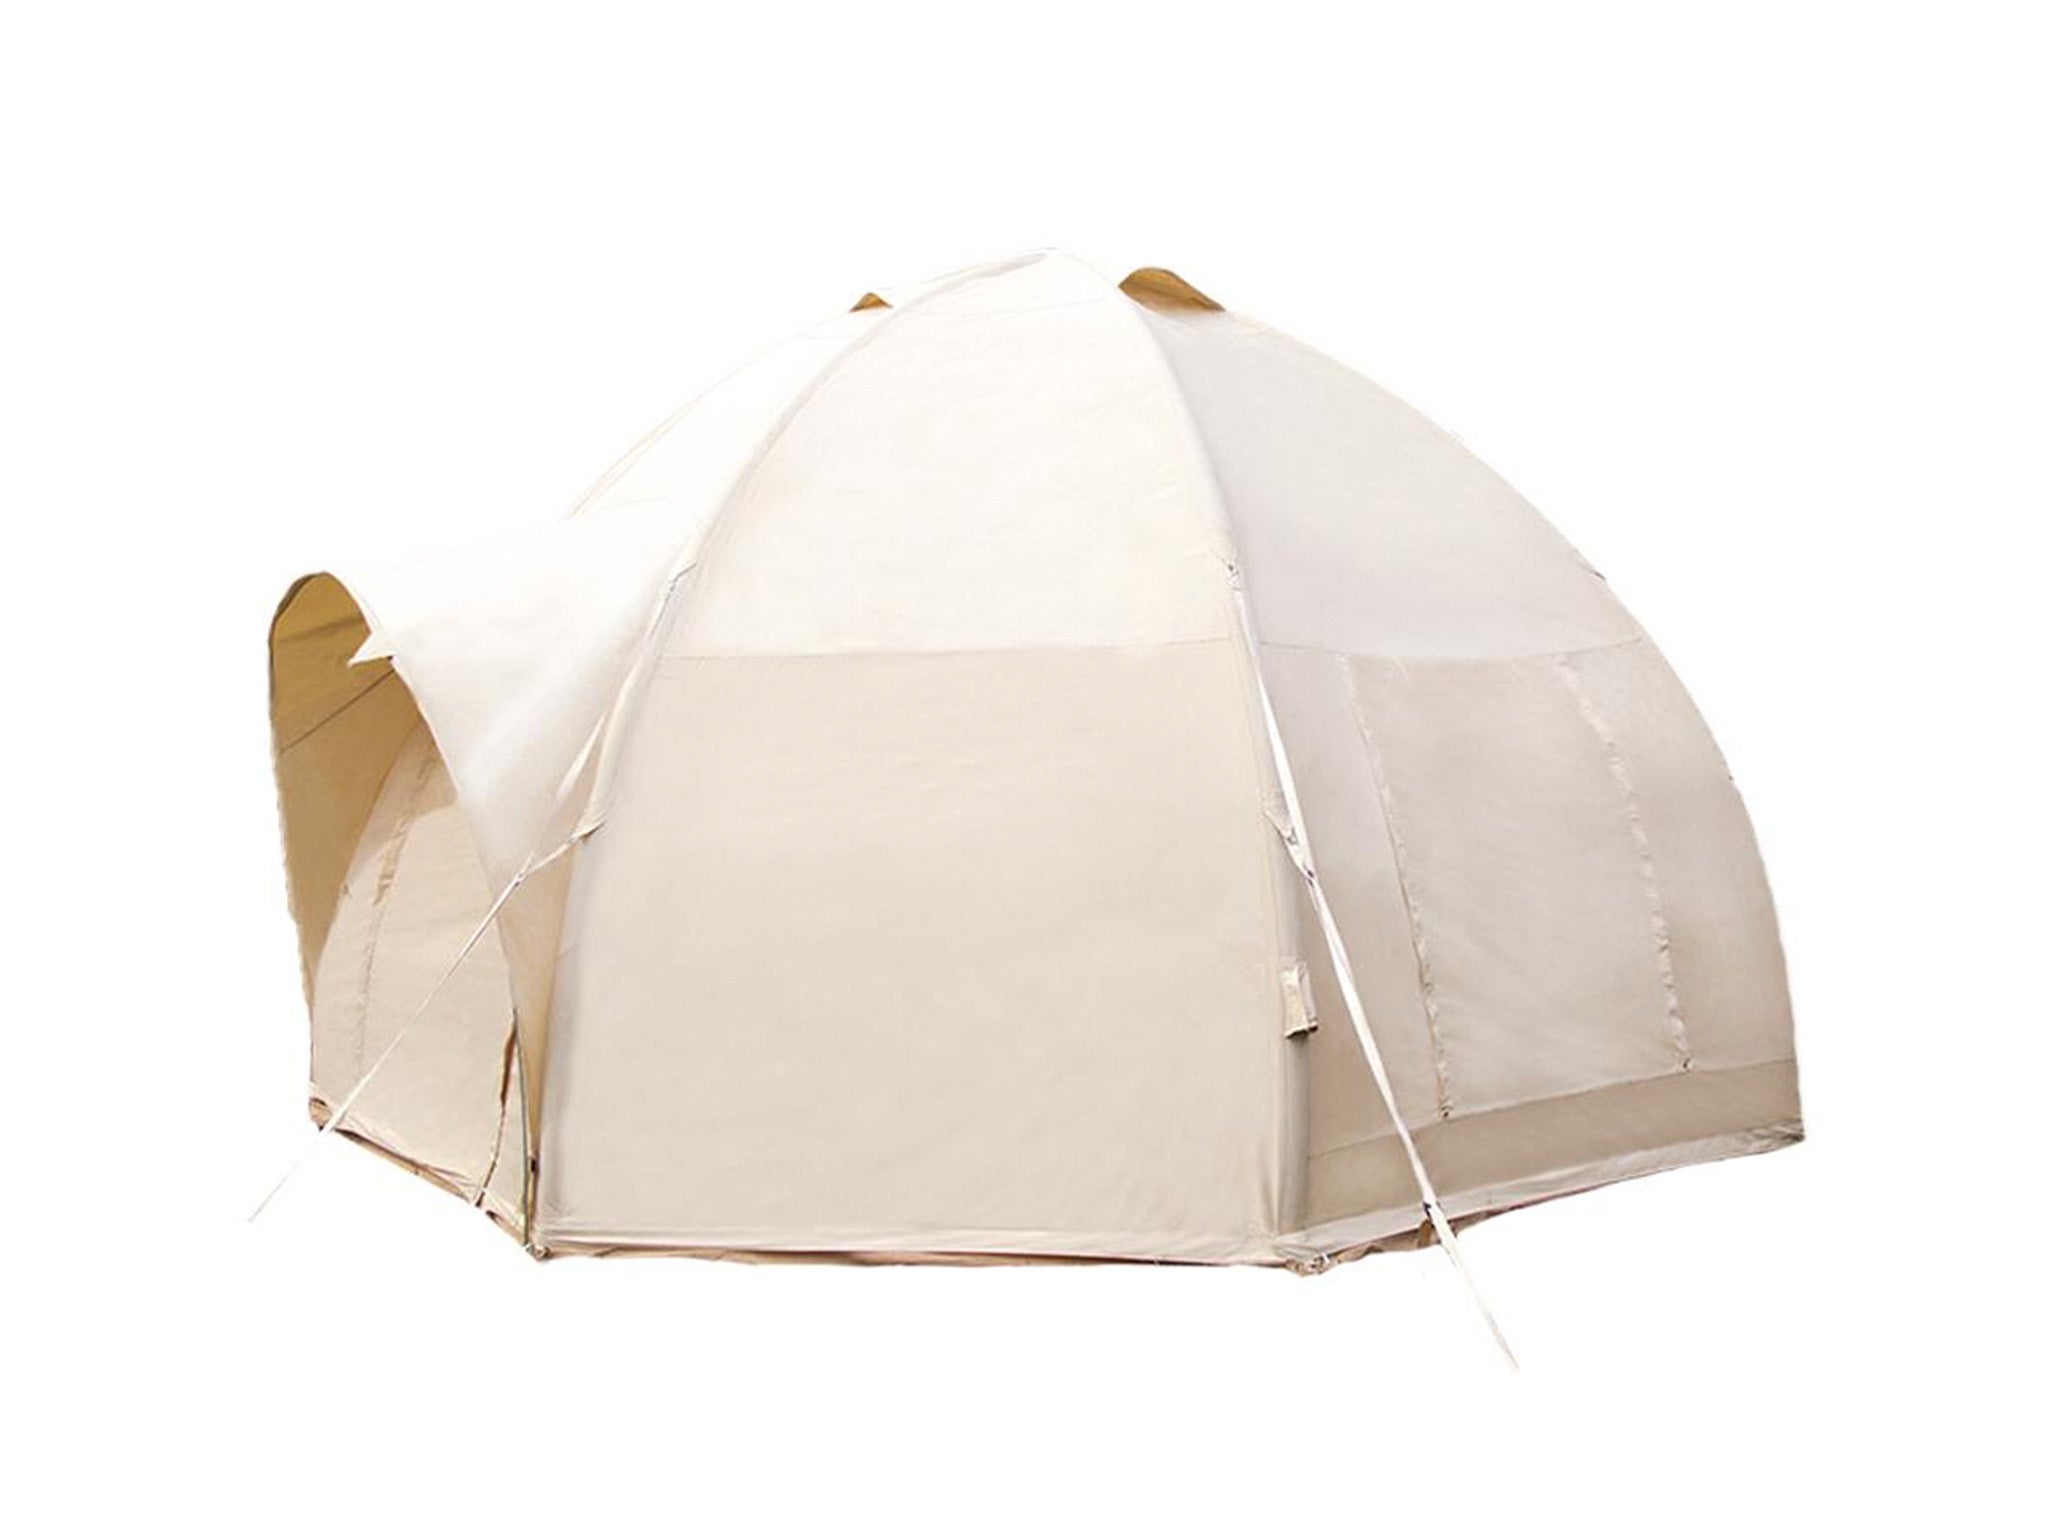 Boutique Camping nova air dome tent